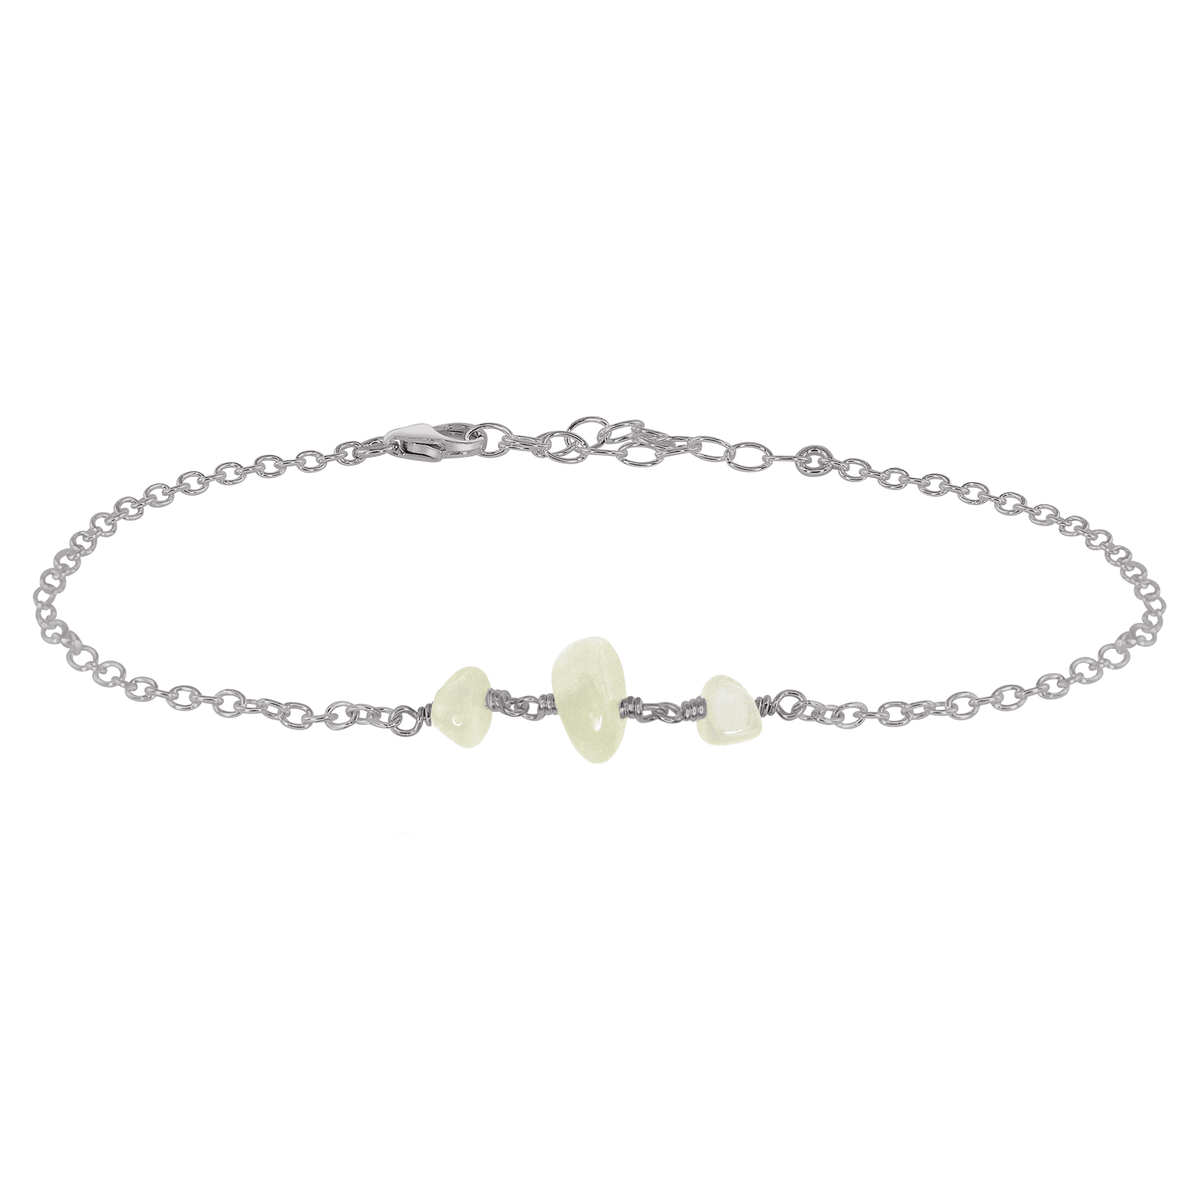 Beaded Chain Anklet - White Moonstone - Stainless Steel - Luna Tide Handmade Jewellery